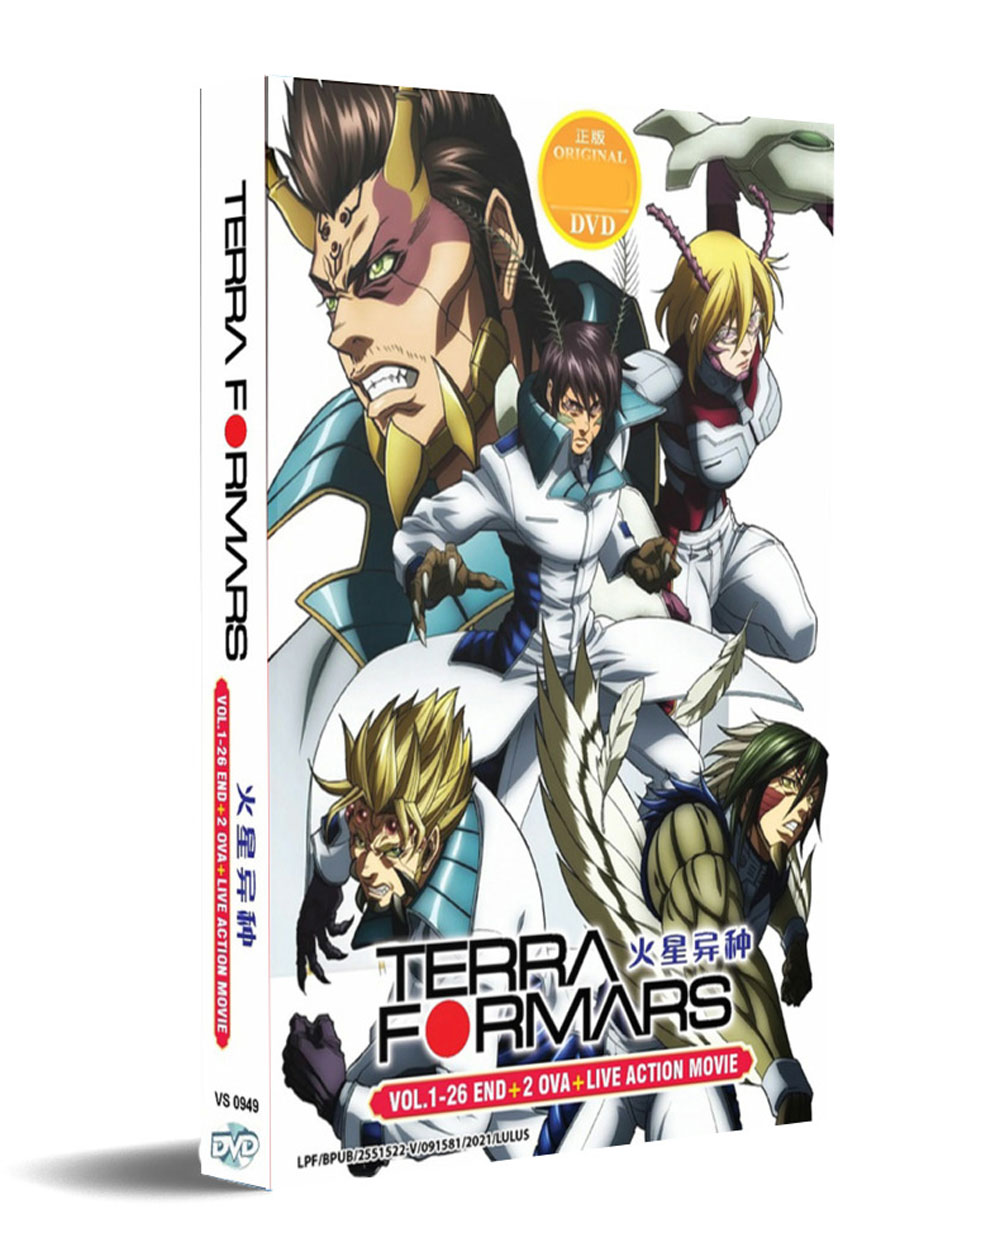 TERRA FORMARS [テラフォーマーズ] +2OVA + Live Action Movie (DVD) (2014-2018) アニメ